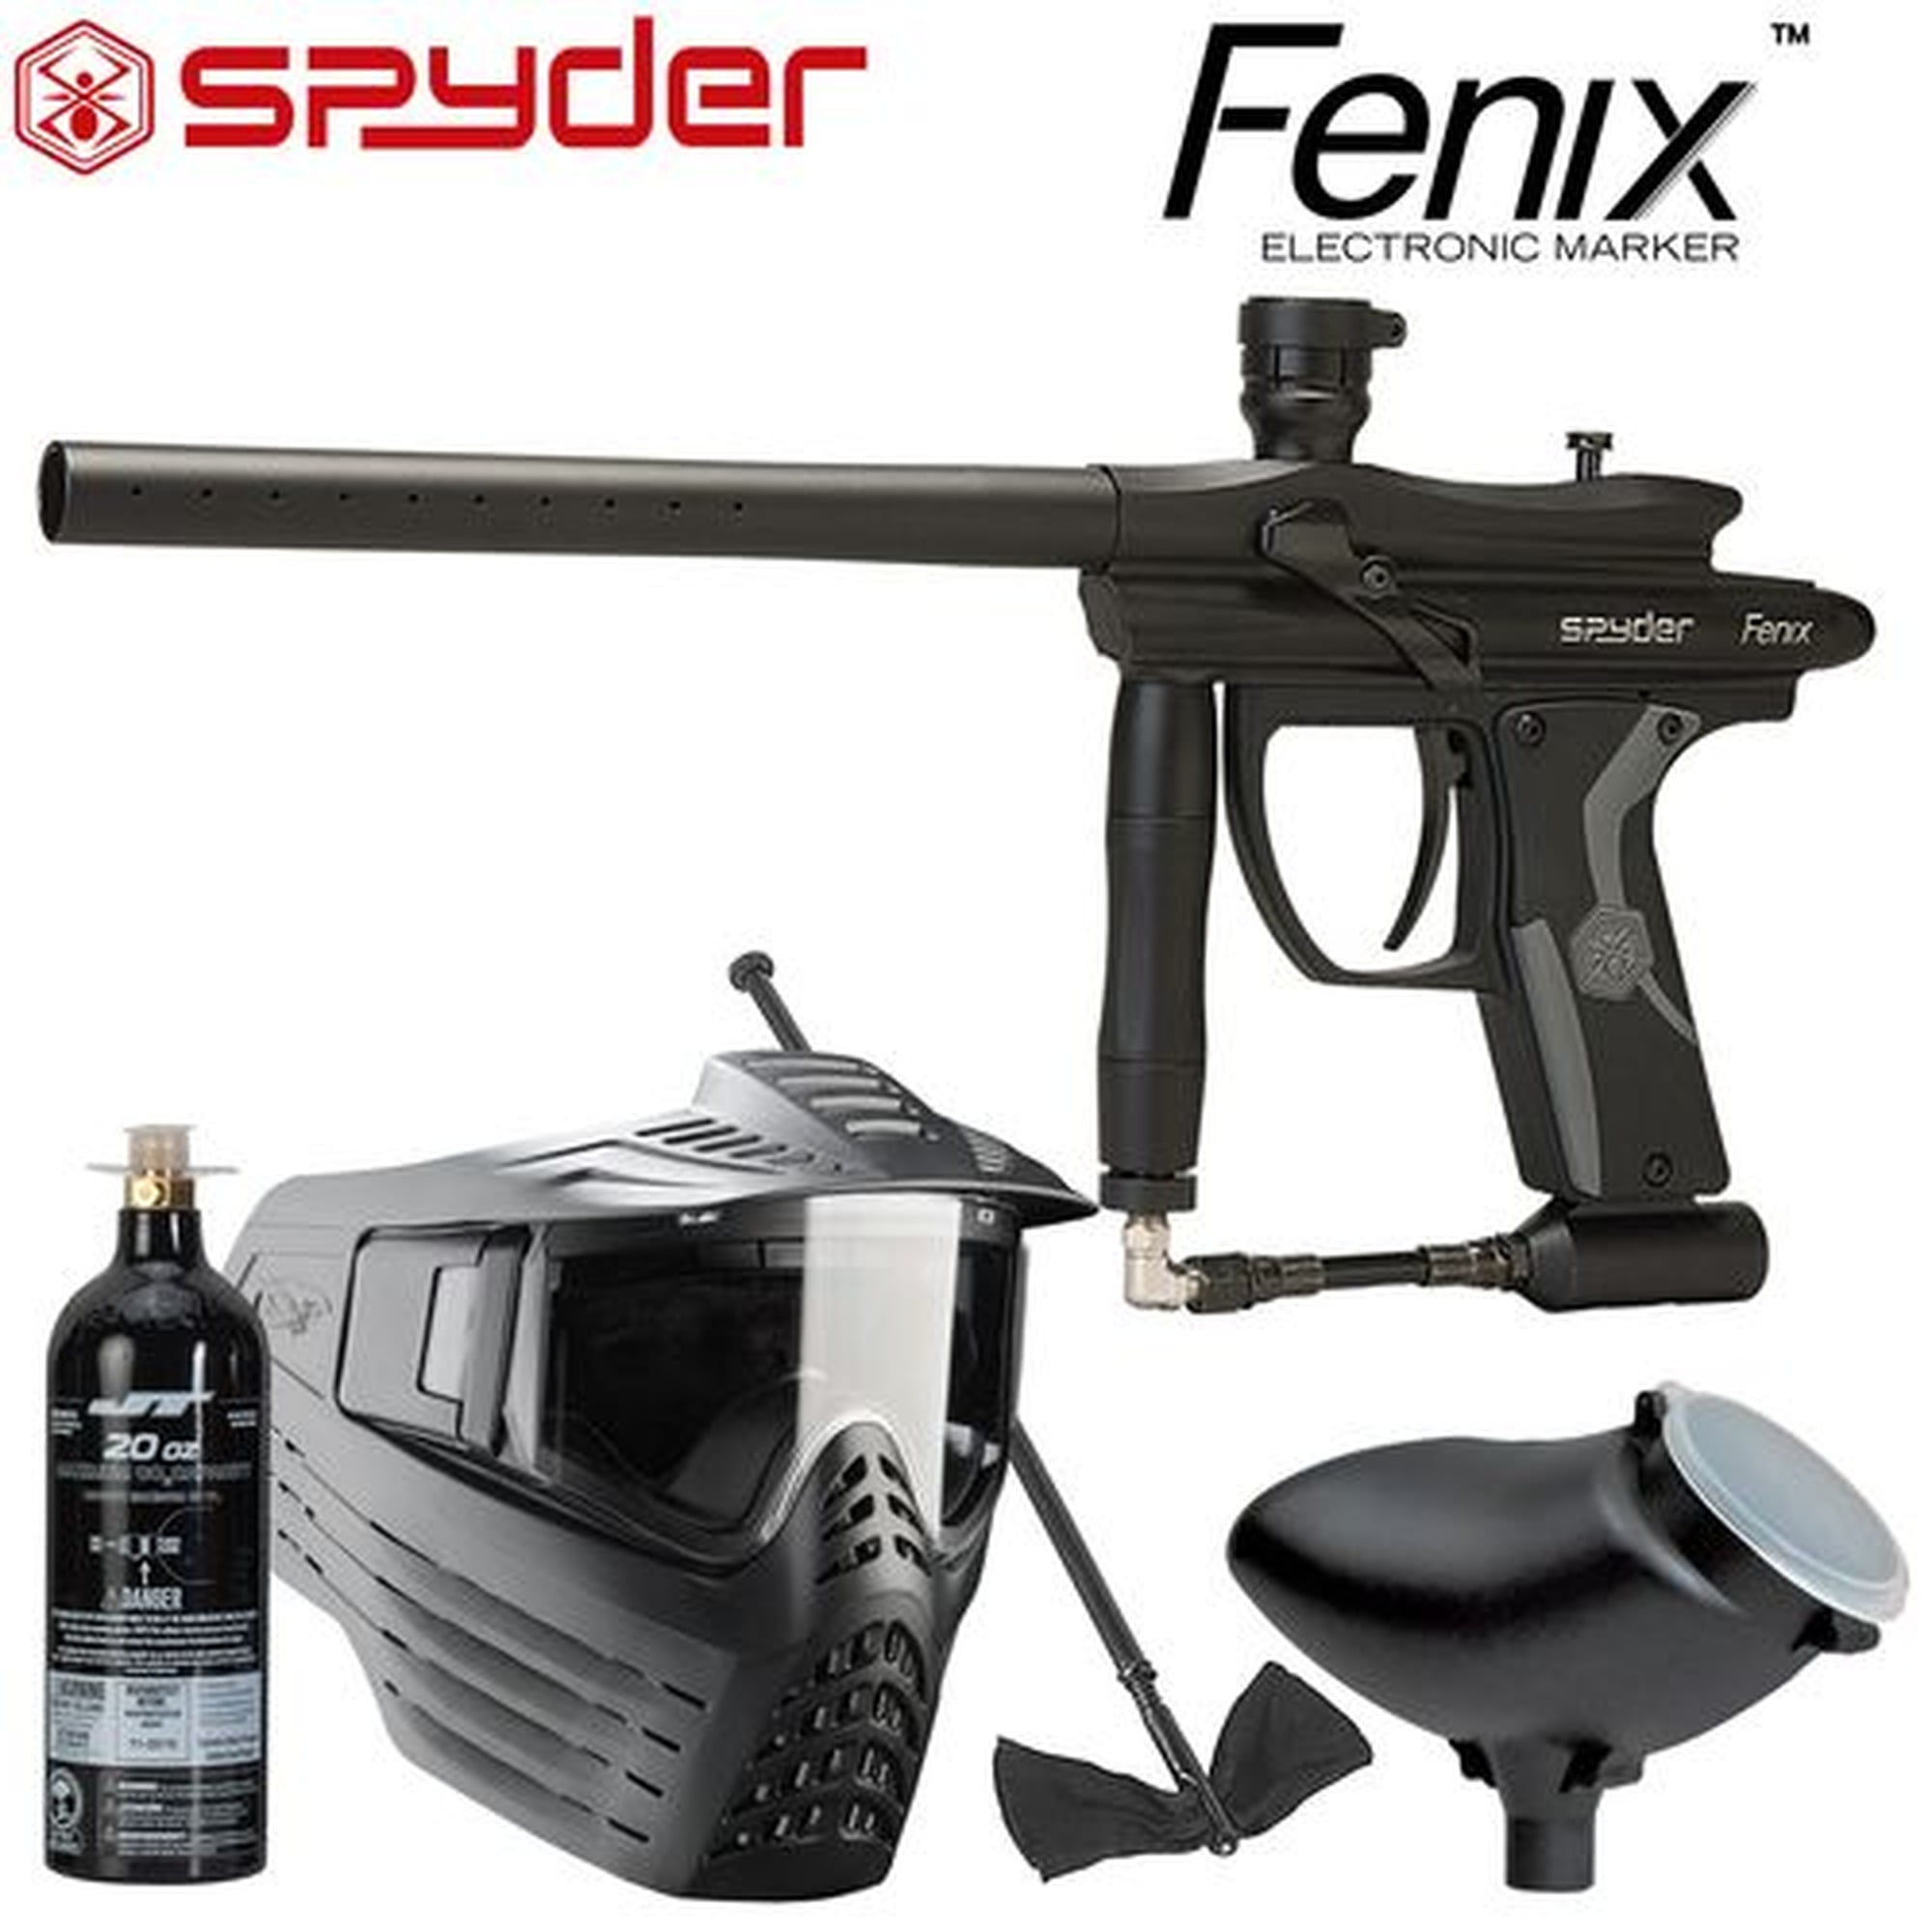 Buy Spyder Fenix Paintball Marker Ready to Play Kit at Walmart.com.